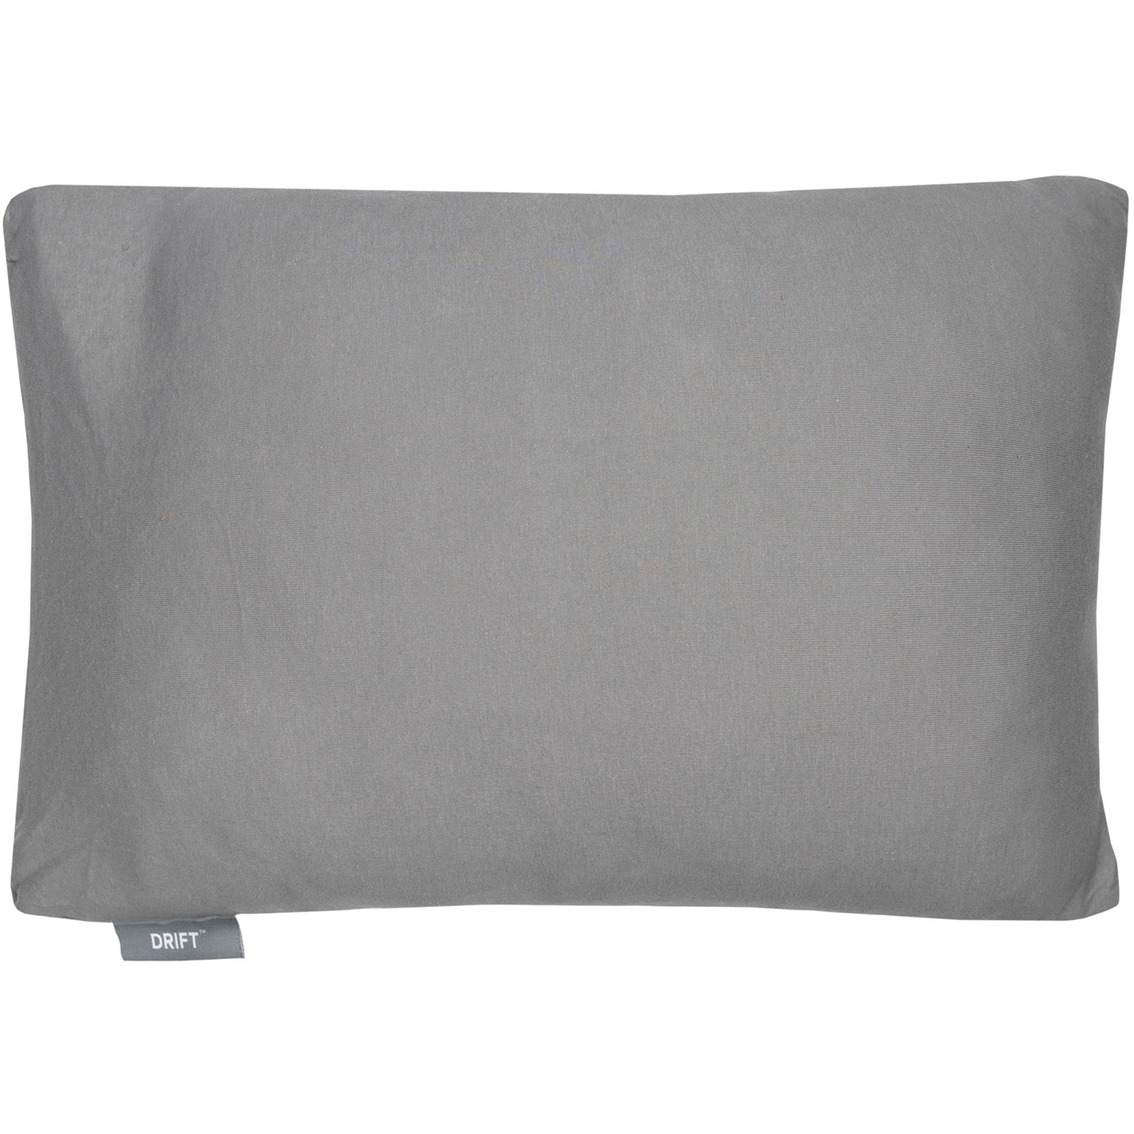 Klymit Drift Car Camp Pillow, Large - Image 3 of 9